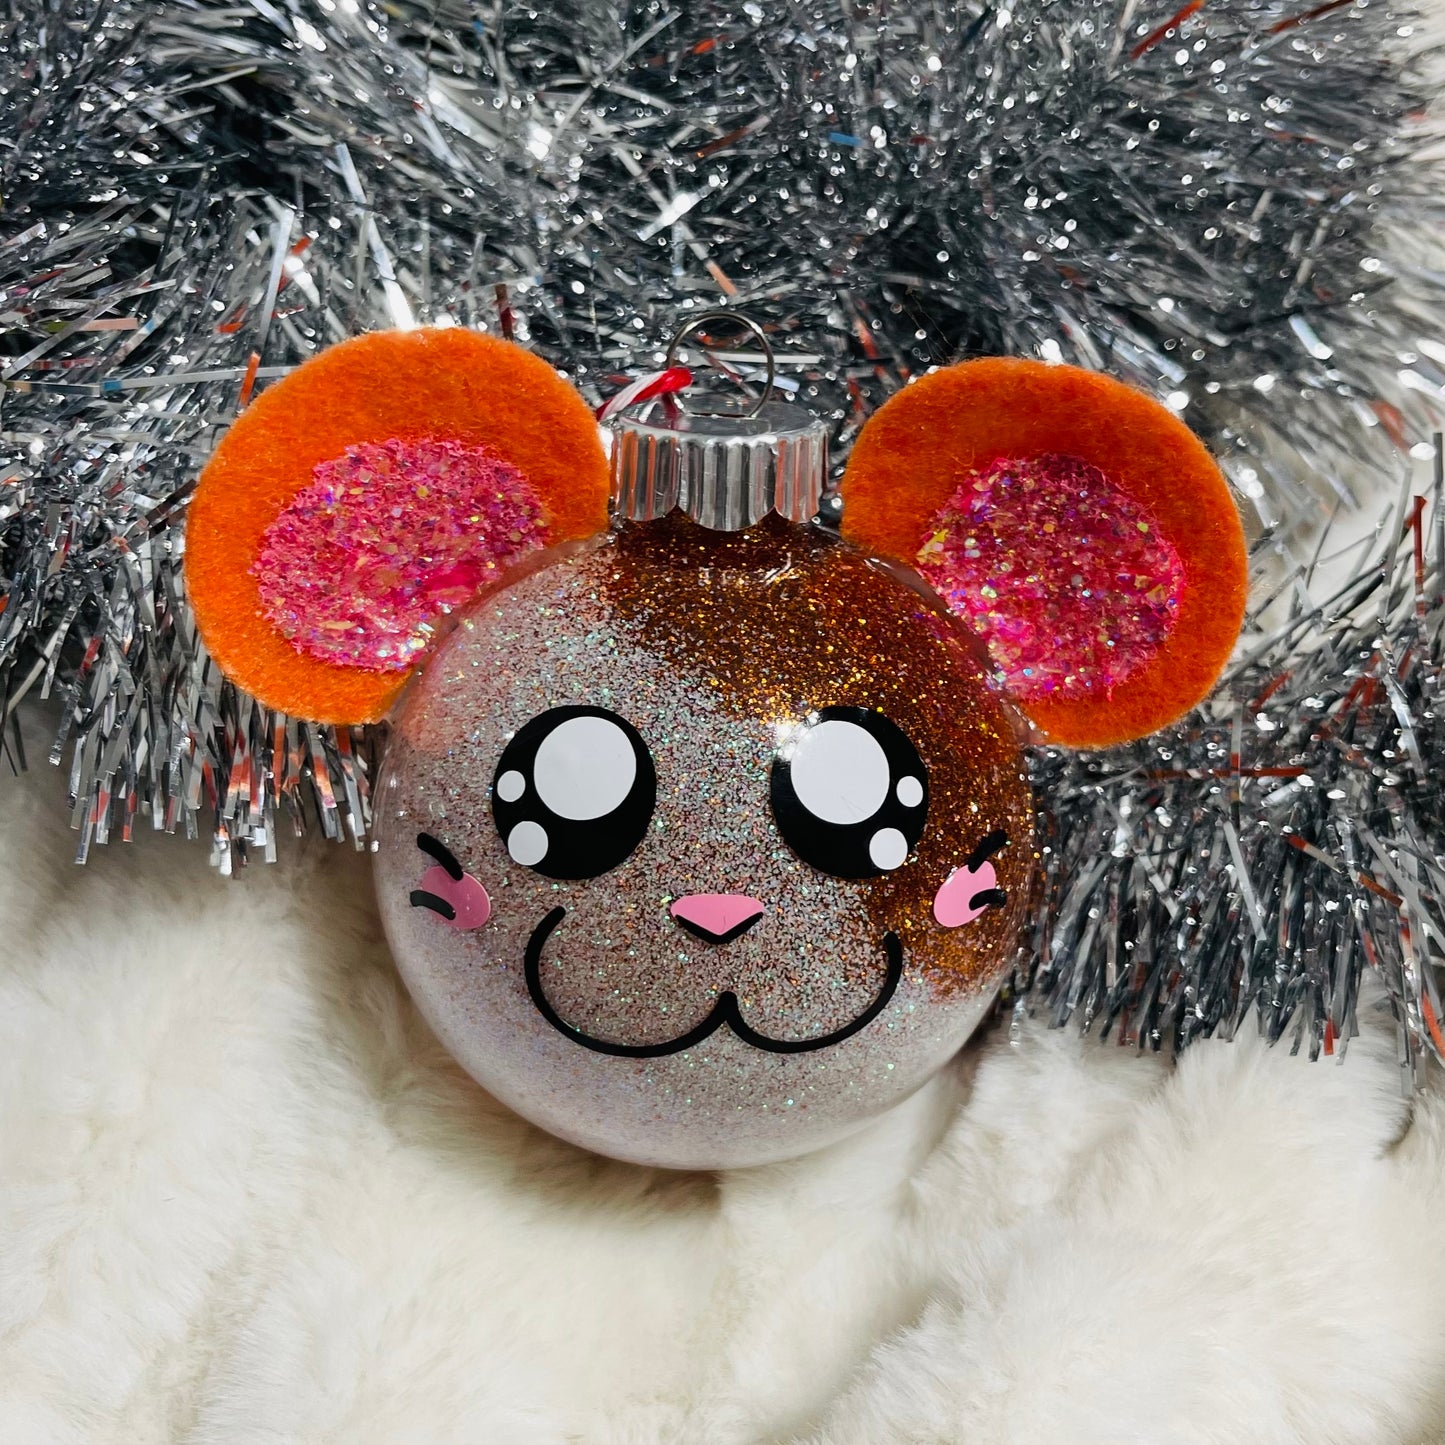 Cutie Hamster Ornaments